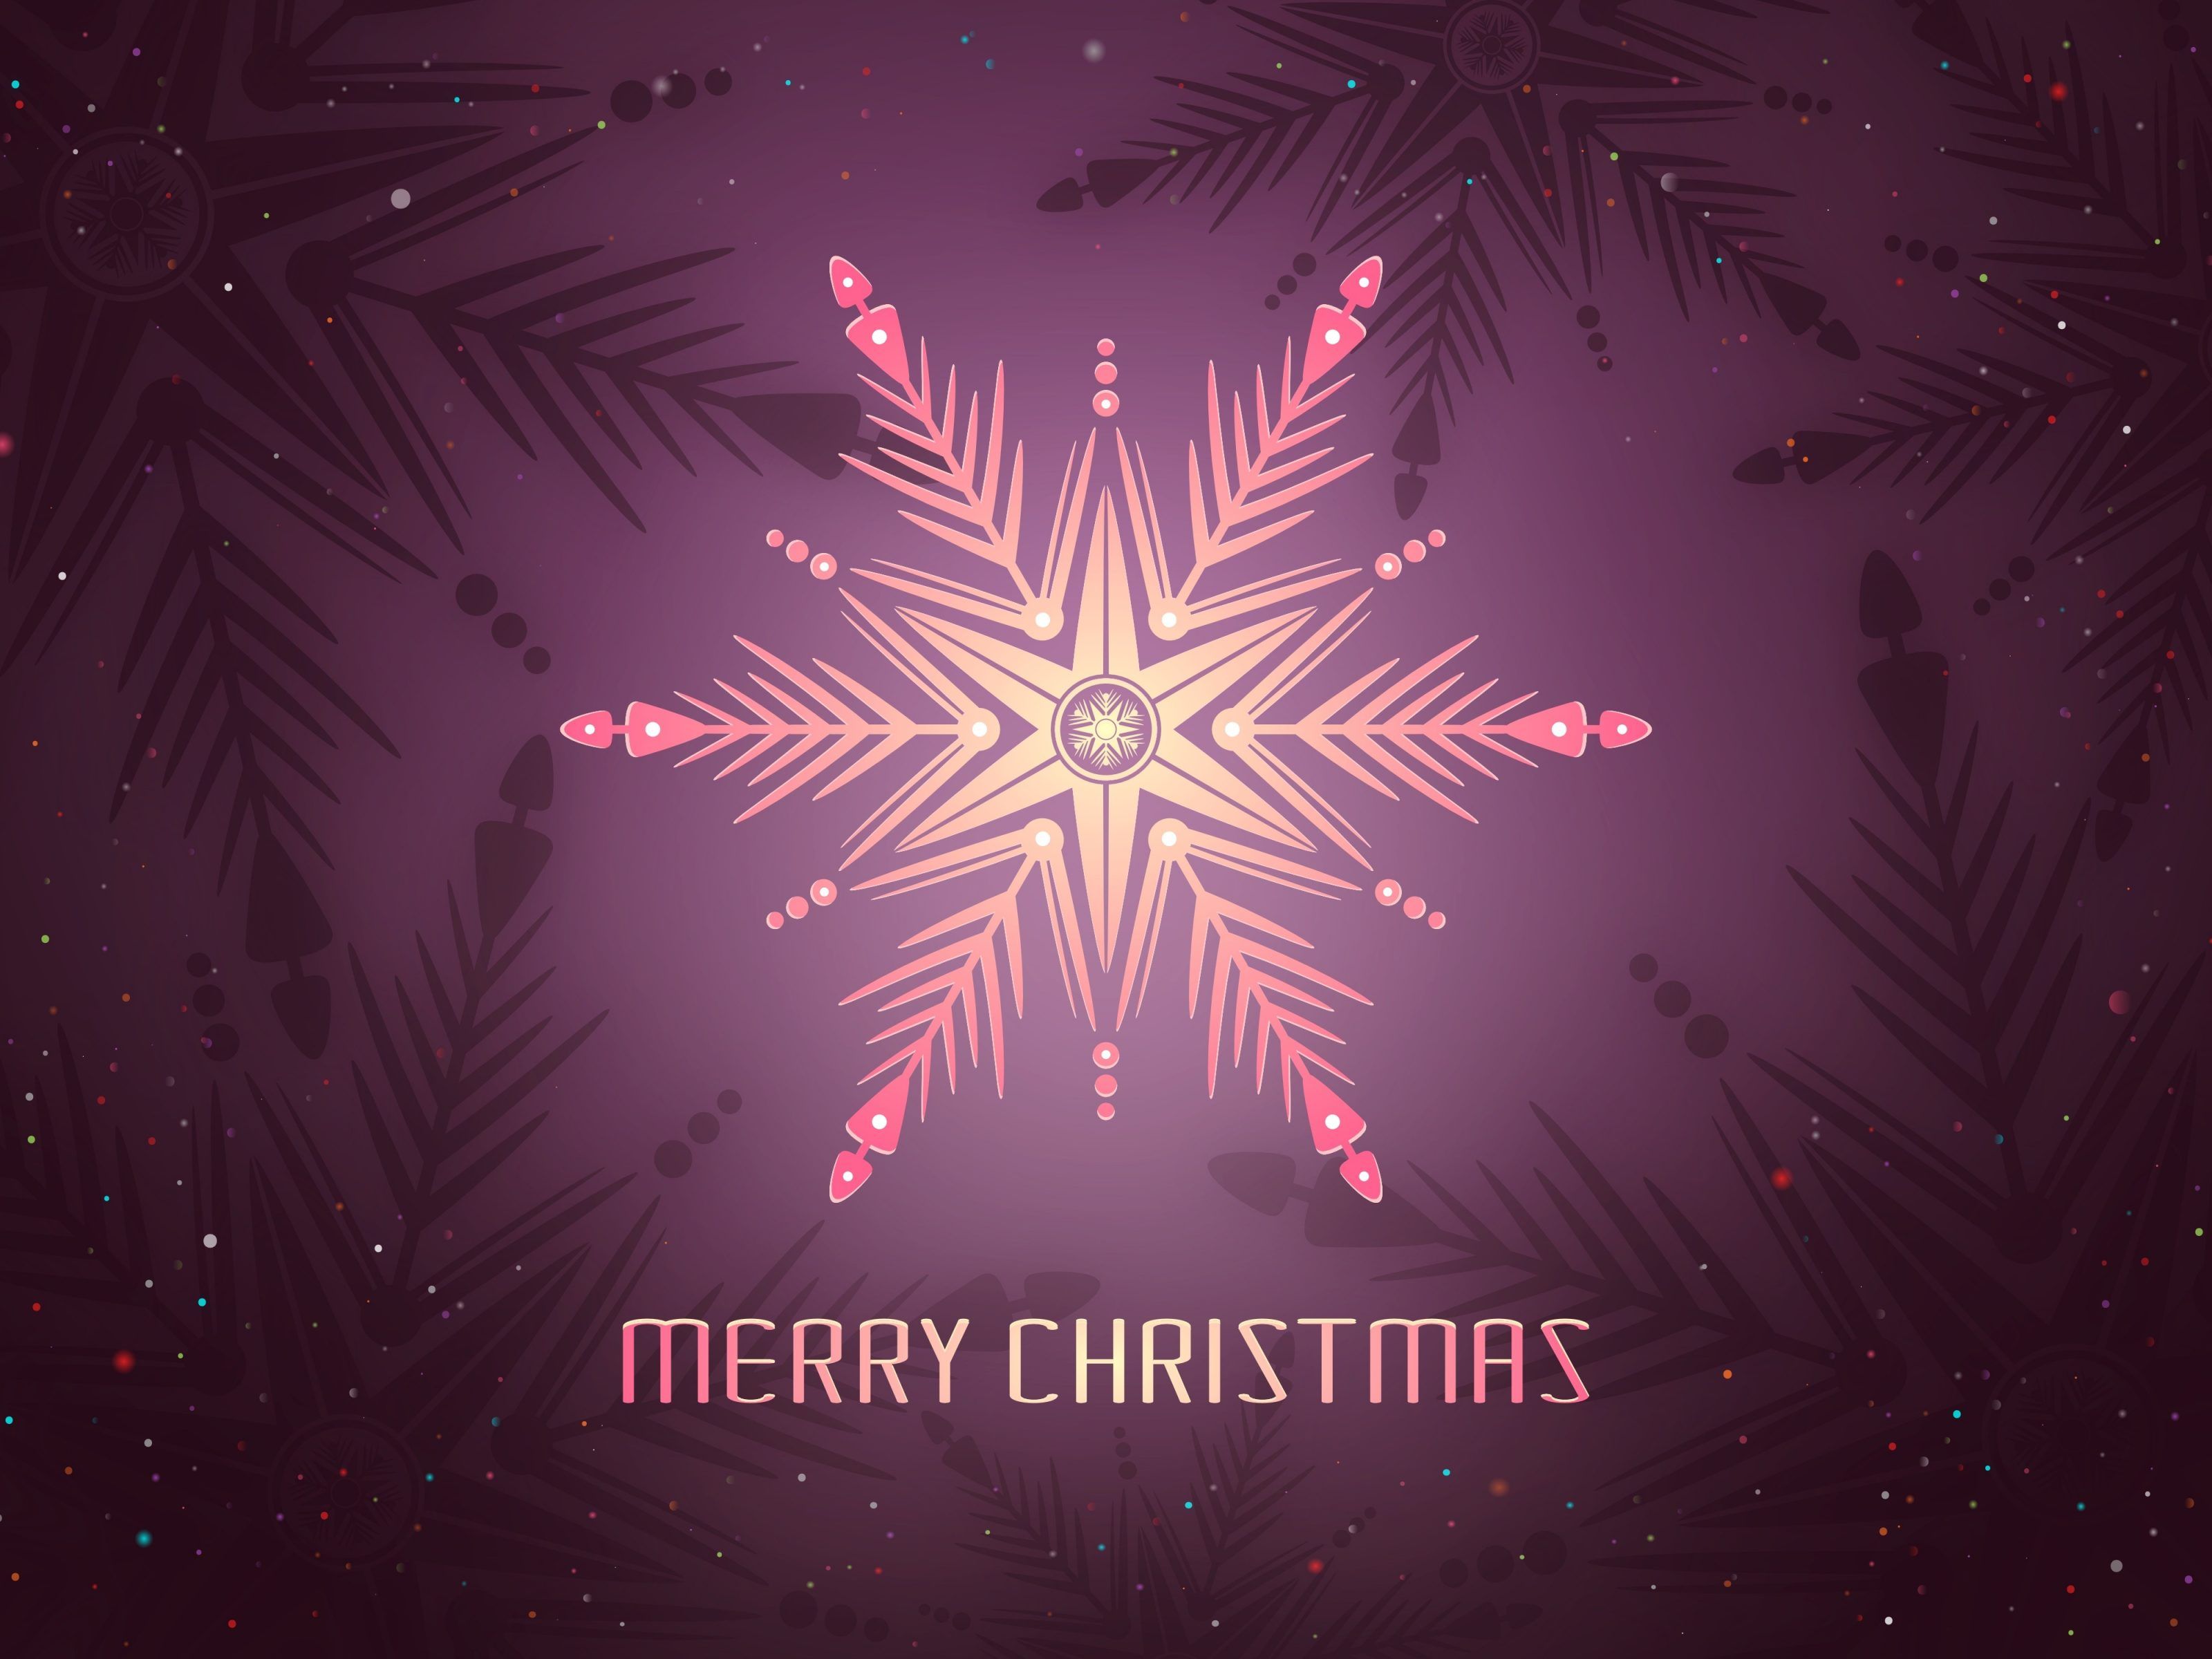 Merry Christmas (Pink) 4K UHD Wallpaper